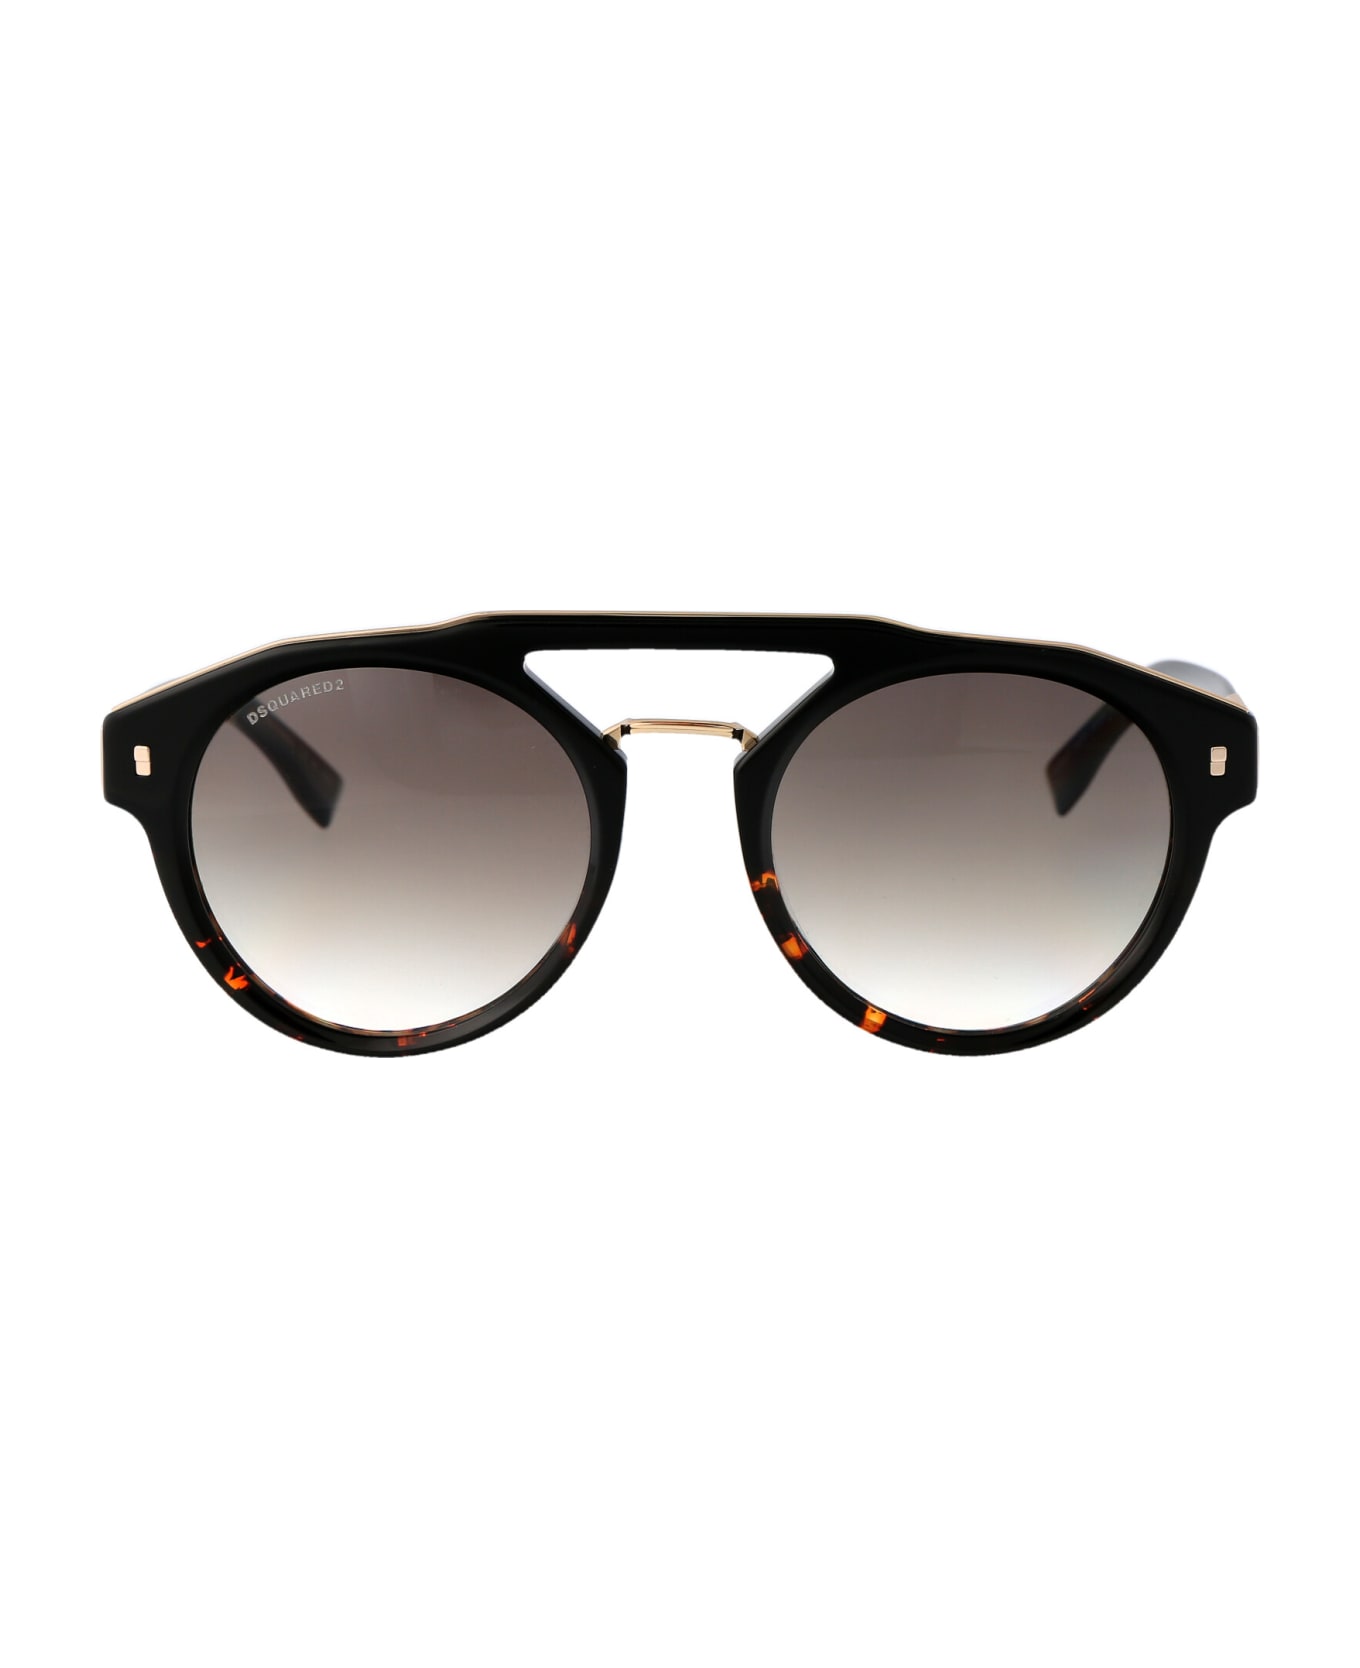 Dsquared2 Eyewear D2 0085/s Sunglasses - WR79K BLACK HAVANA